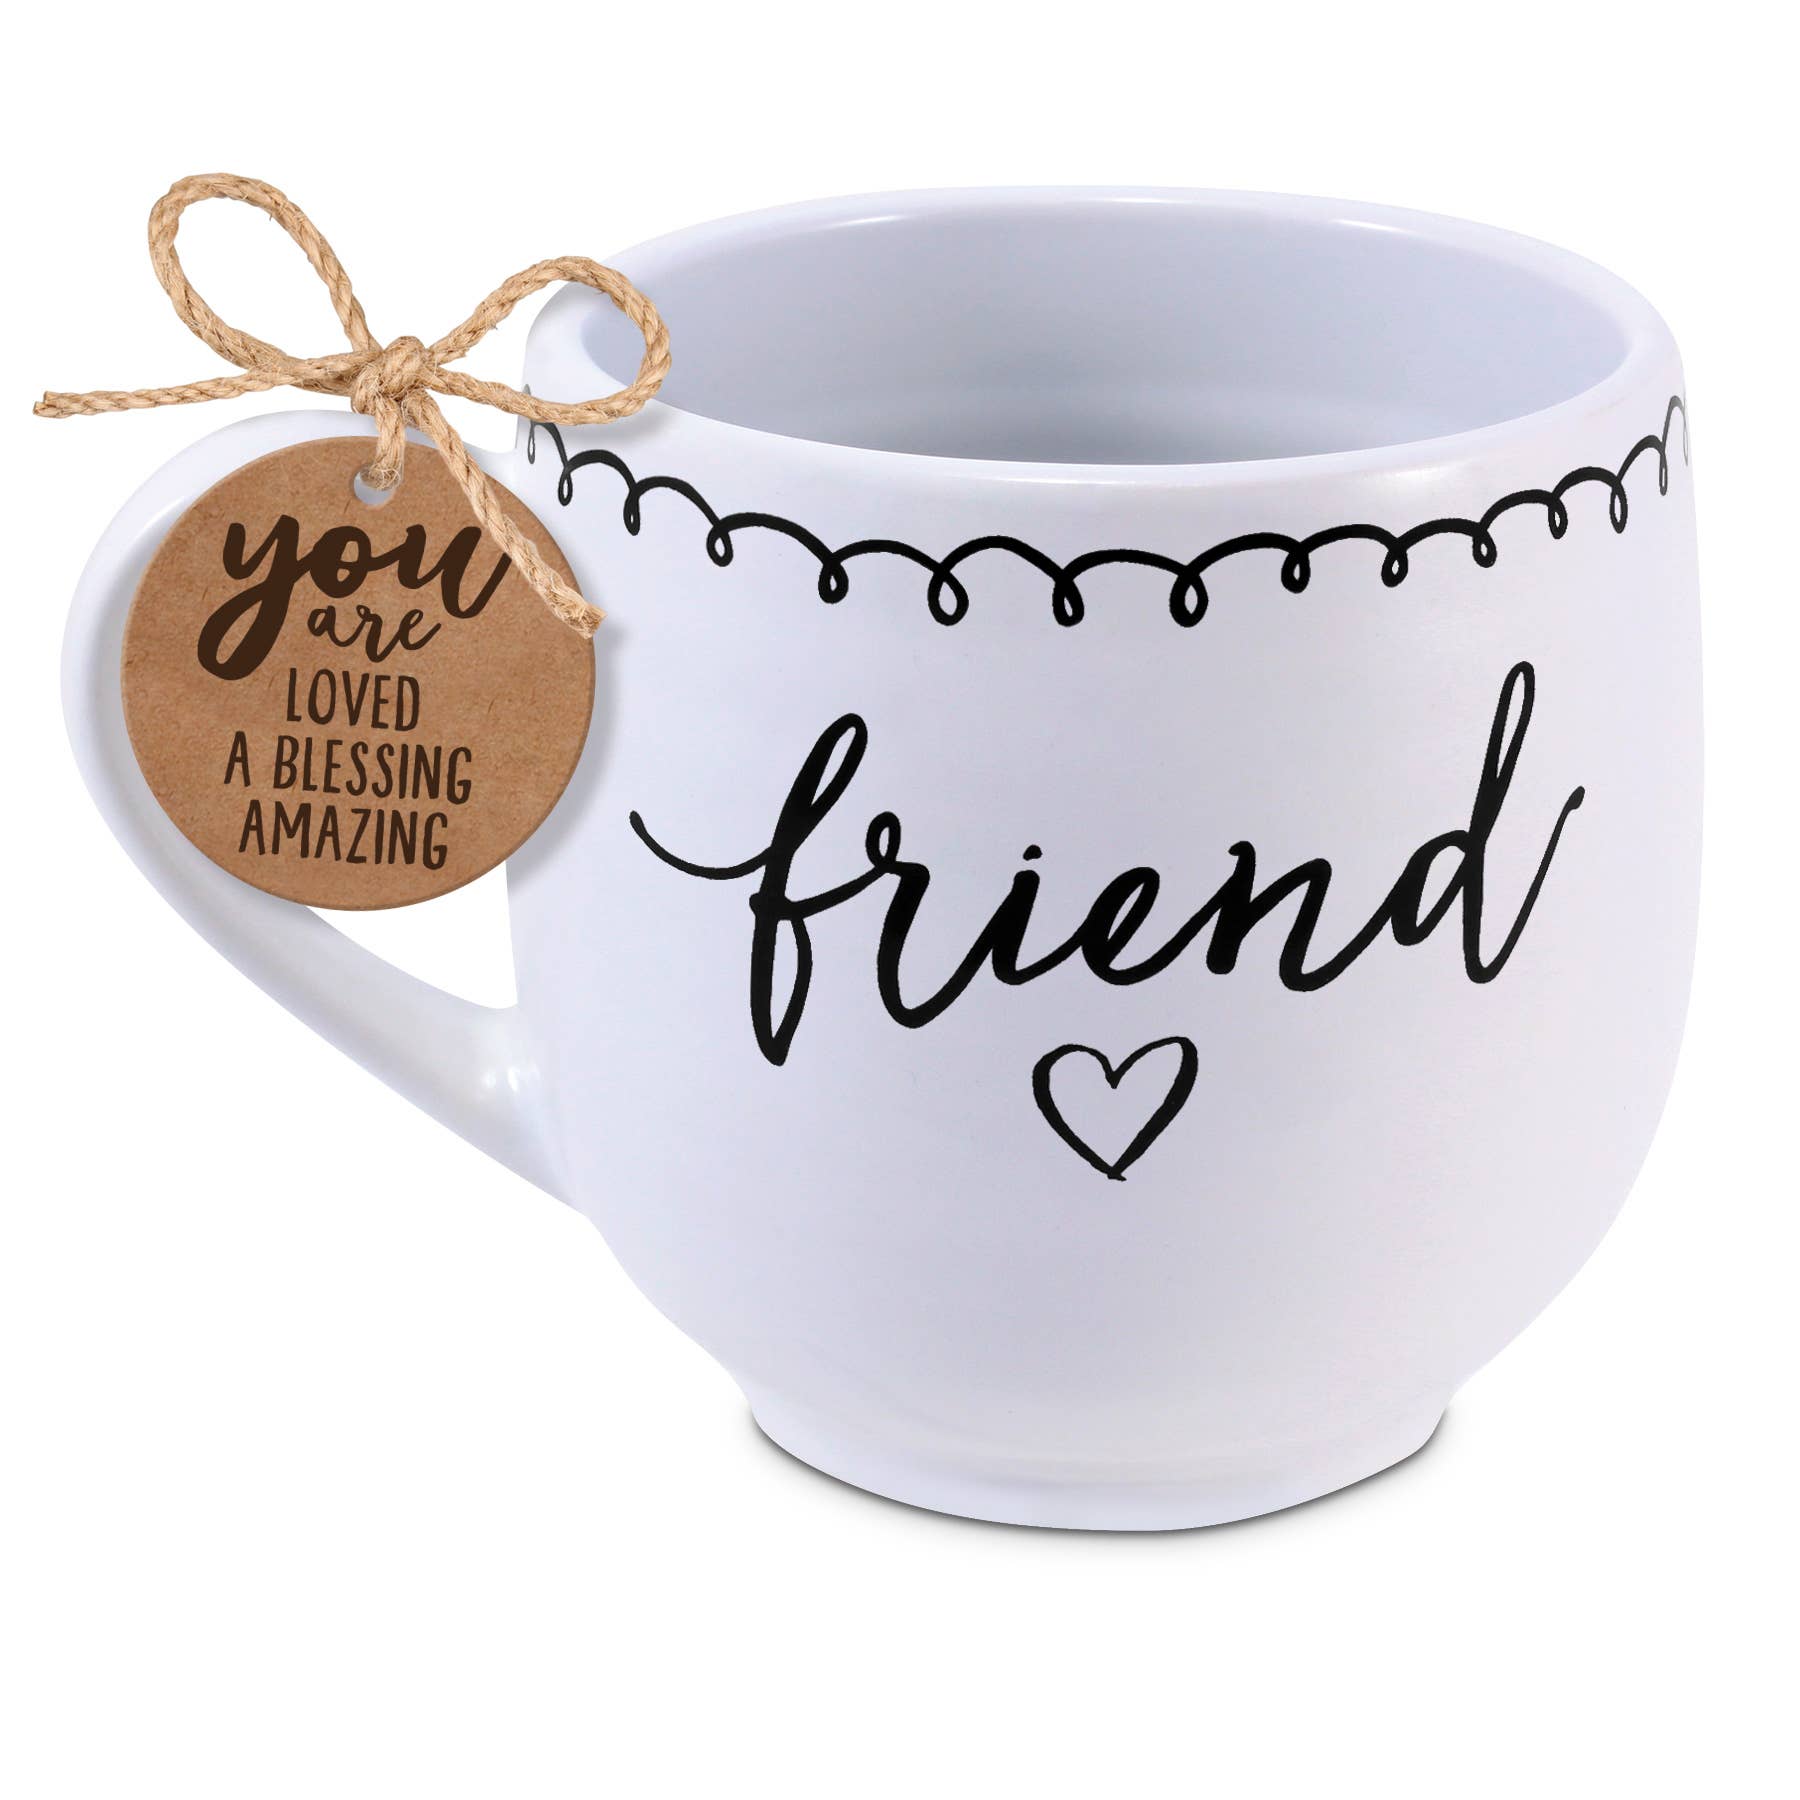 Friend Coffee Mug